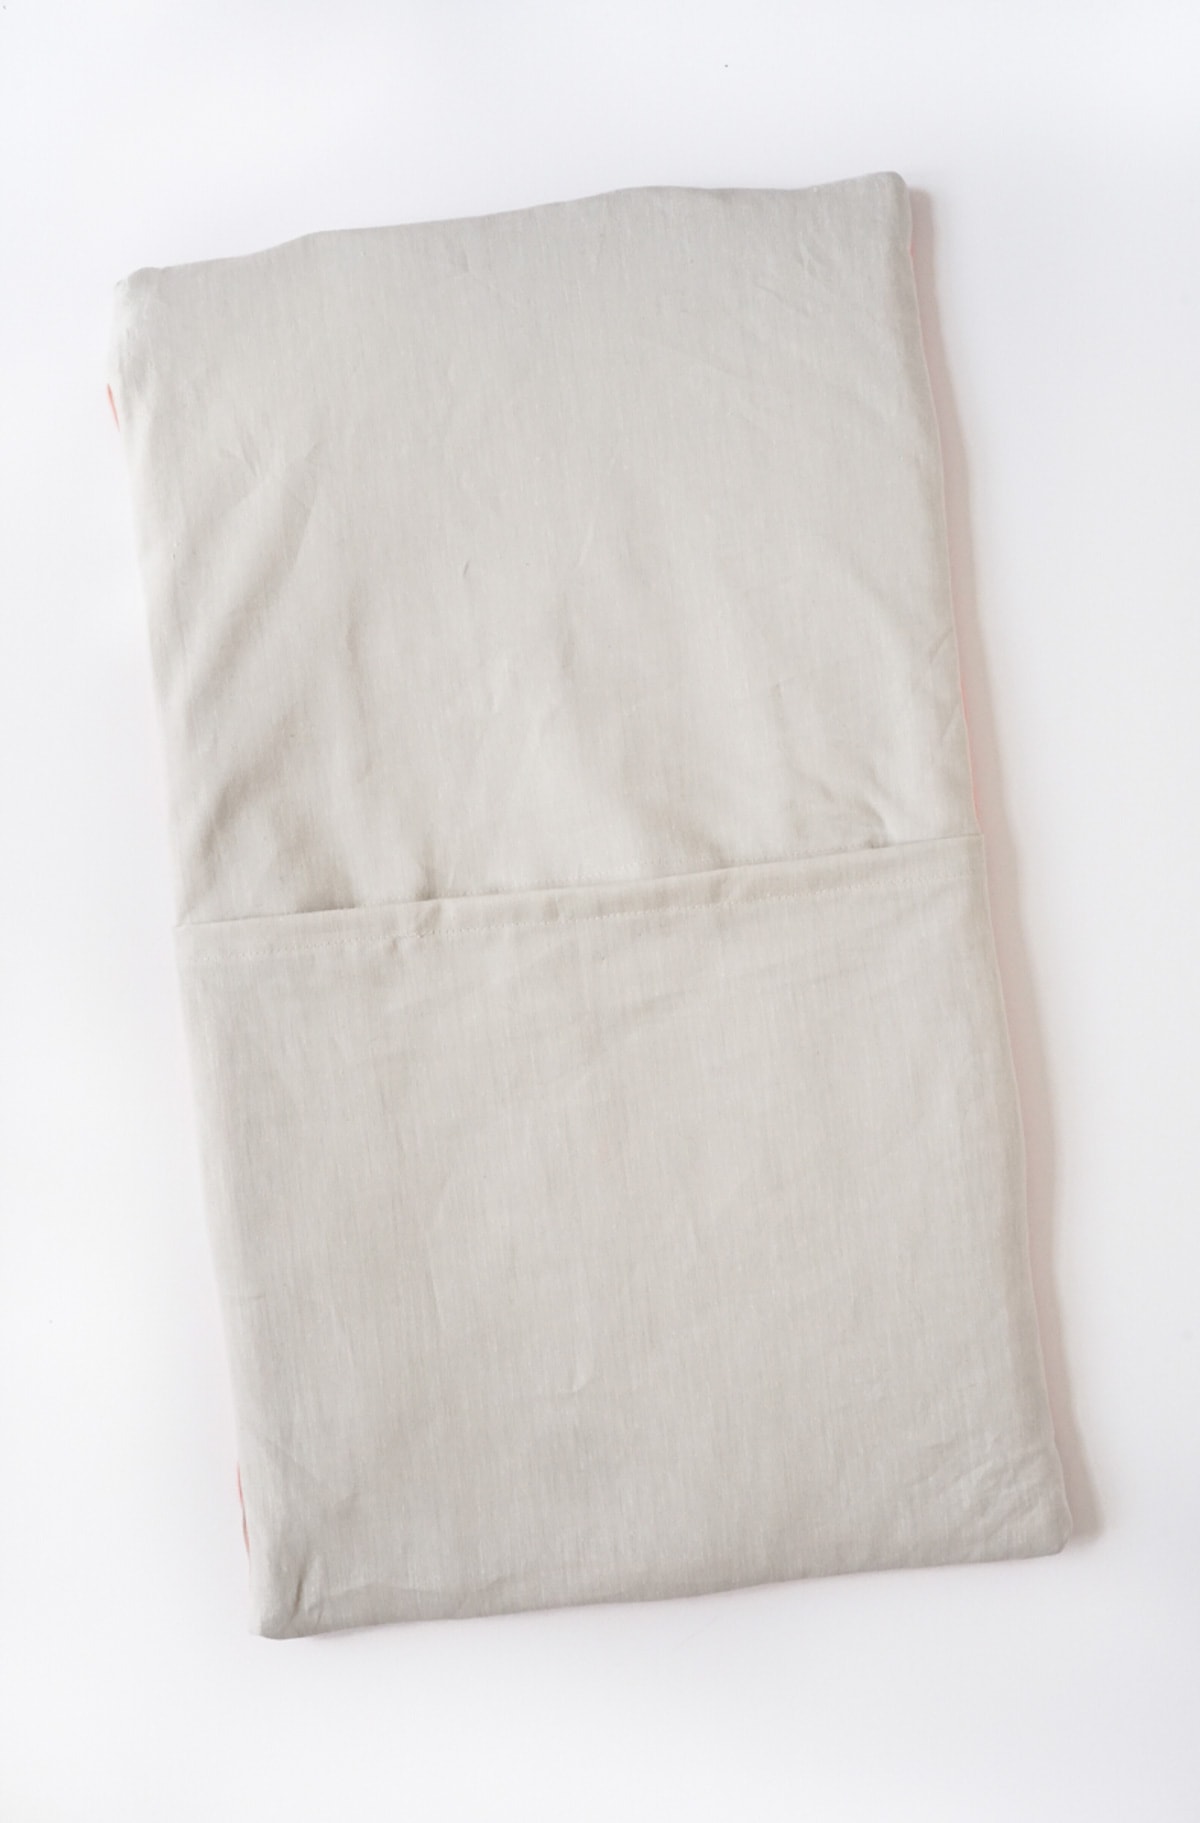 Diy Structured Pleat Lumbar Pillow by Sugar & Cloth, an award winning DIY, home decor, and recipes blog.